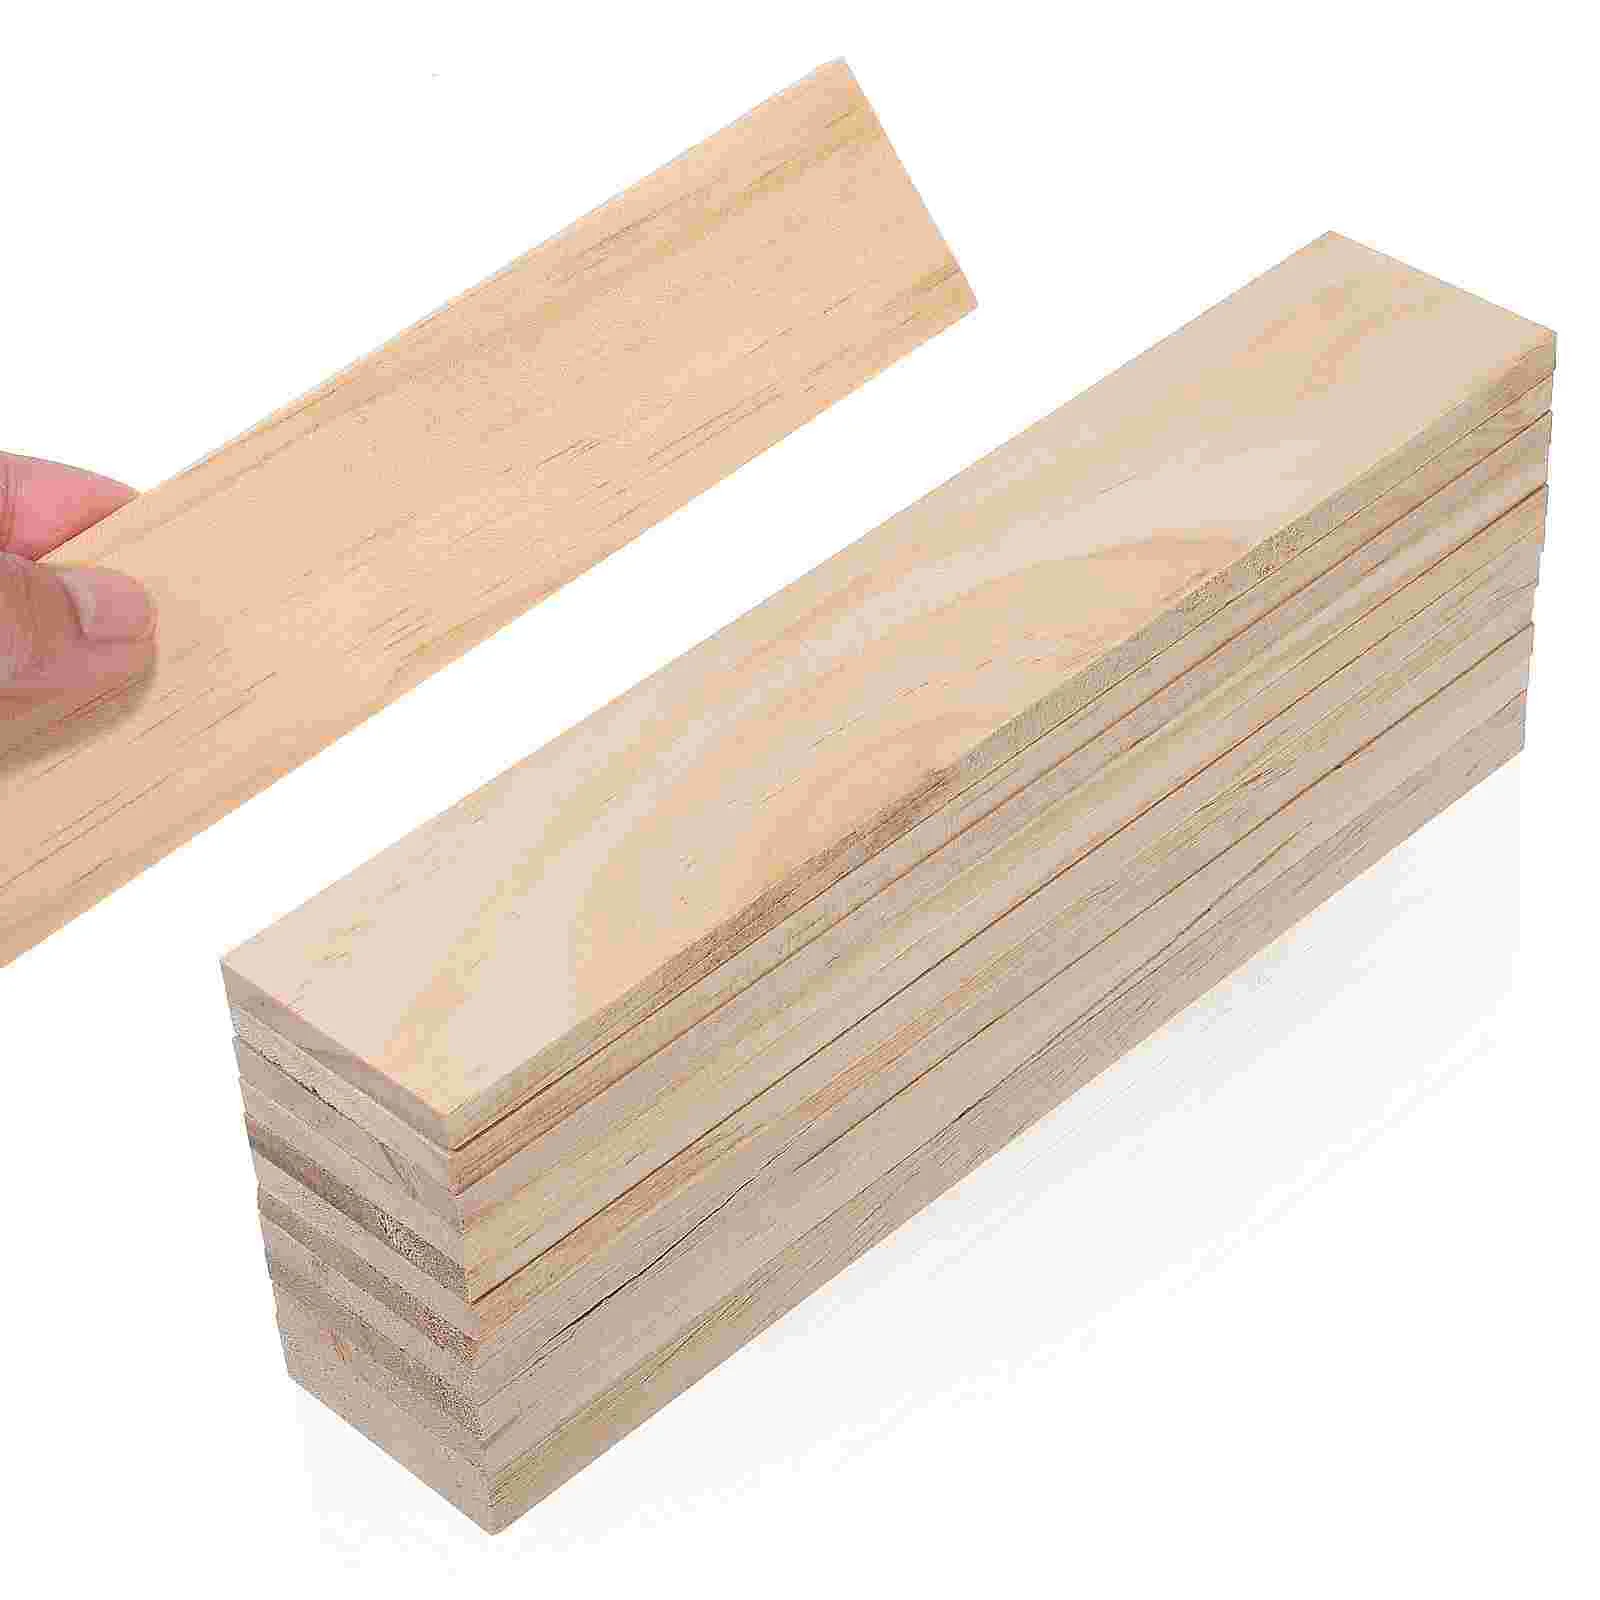 

12 Pcs Wood Planks Boards Shelves Craft Rectangle Block Wooden Blocks Crafting Crafts Unfinished